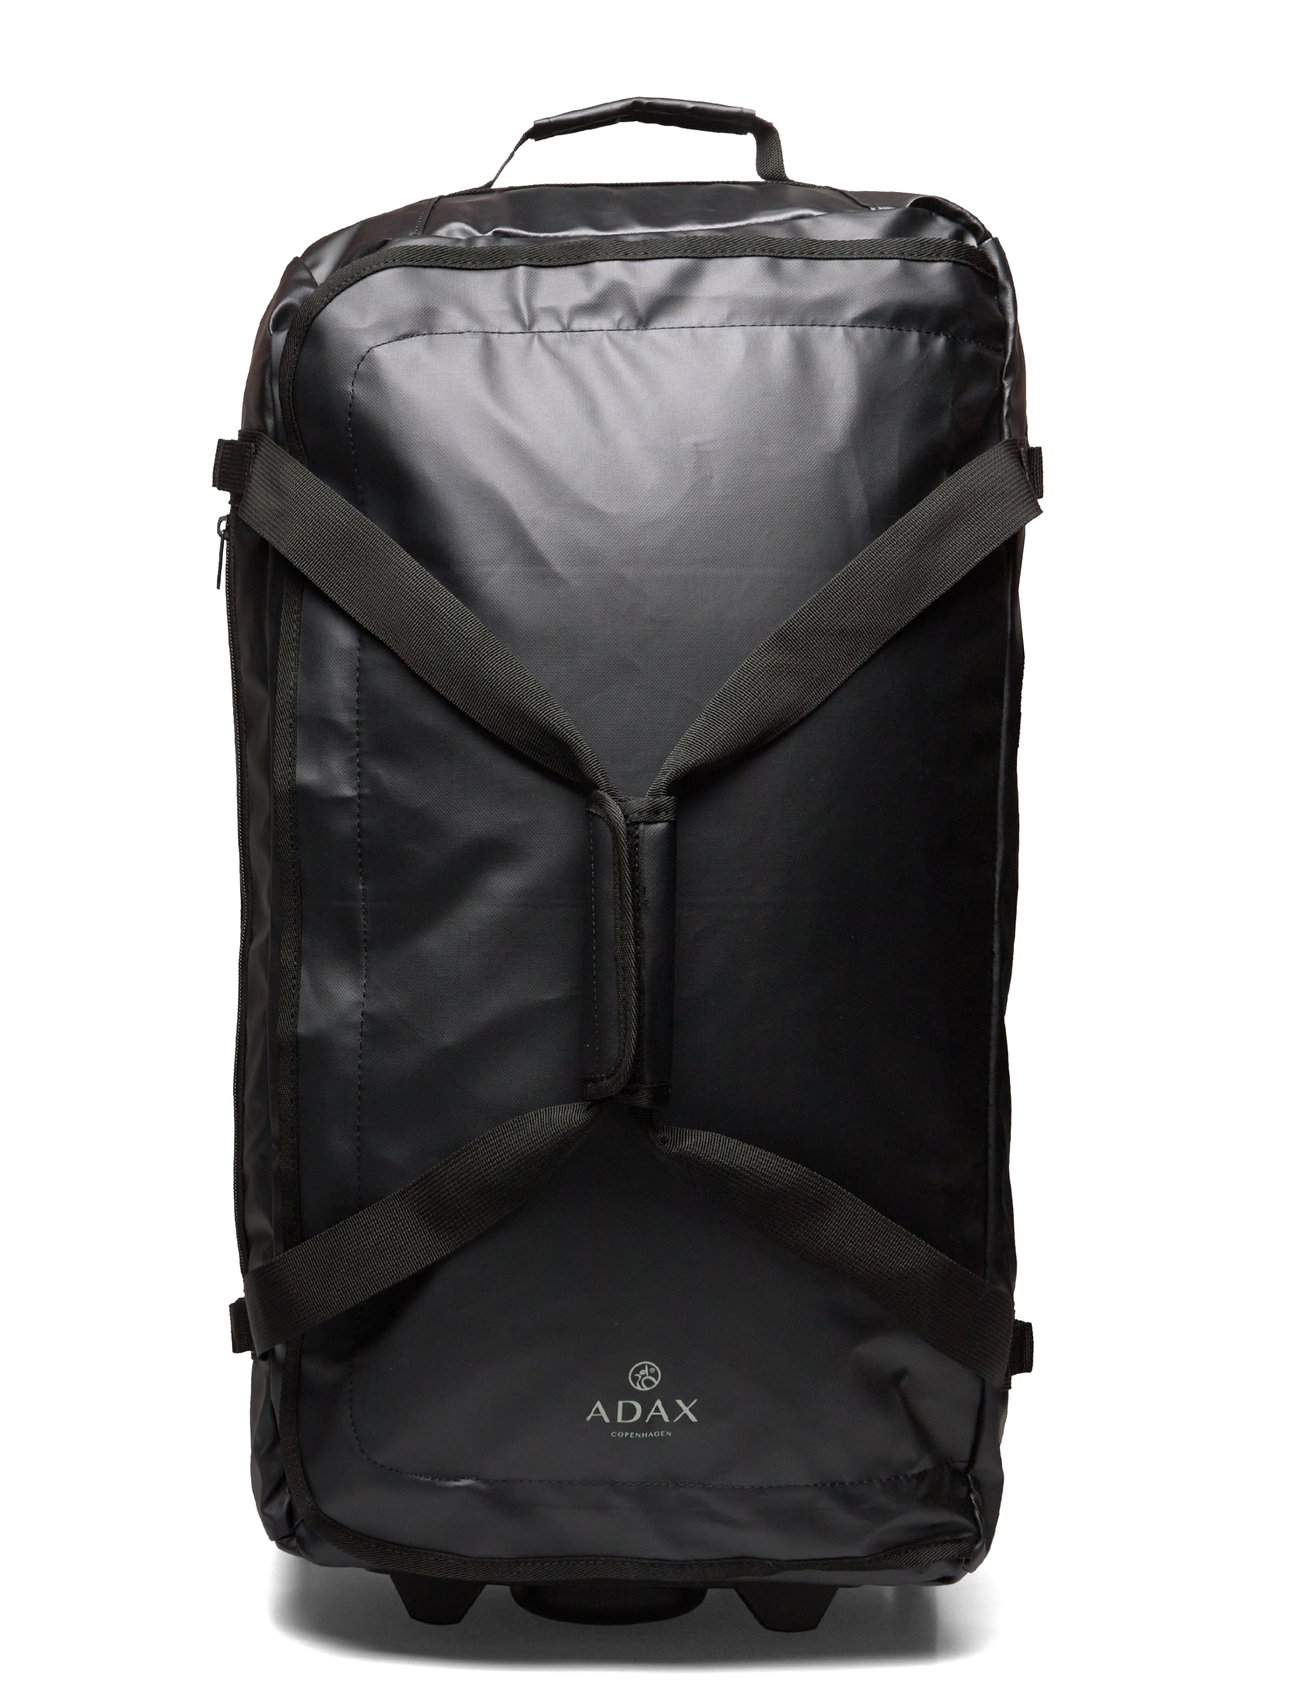 Adax Trolley Duffle Billie Bags Suitcases Black Adax